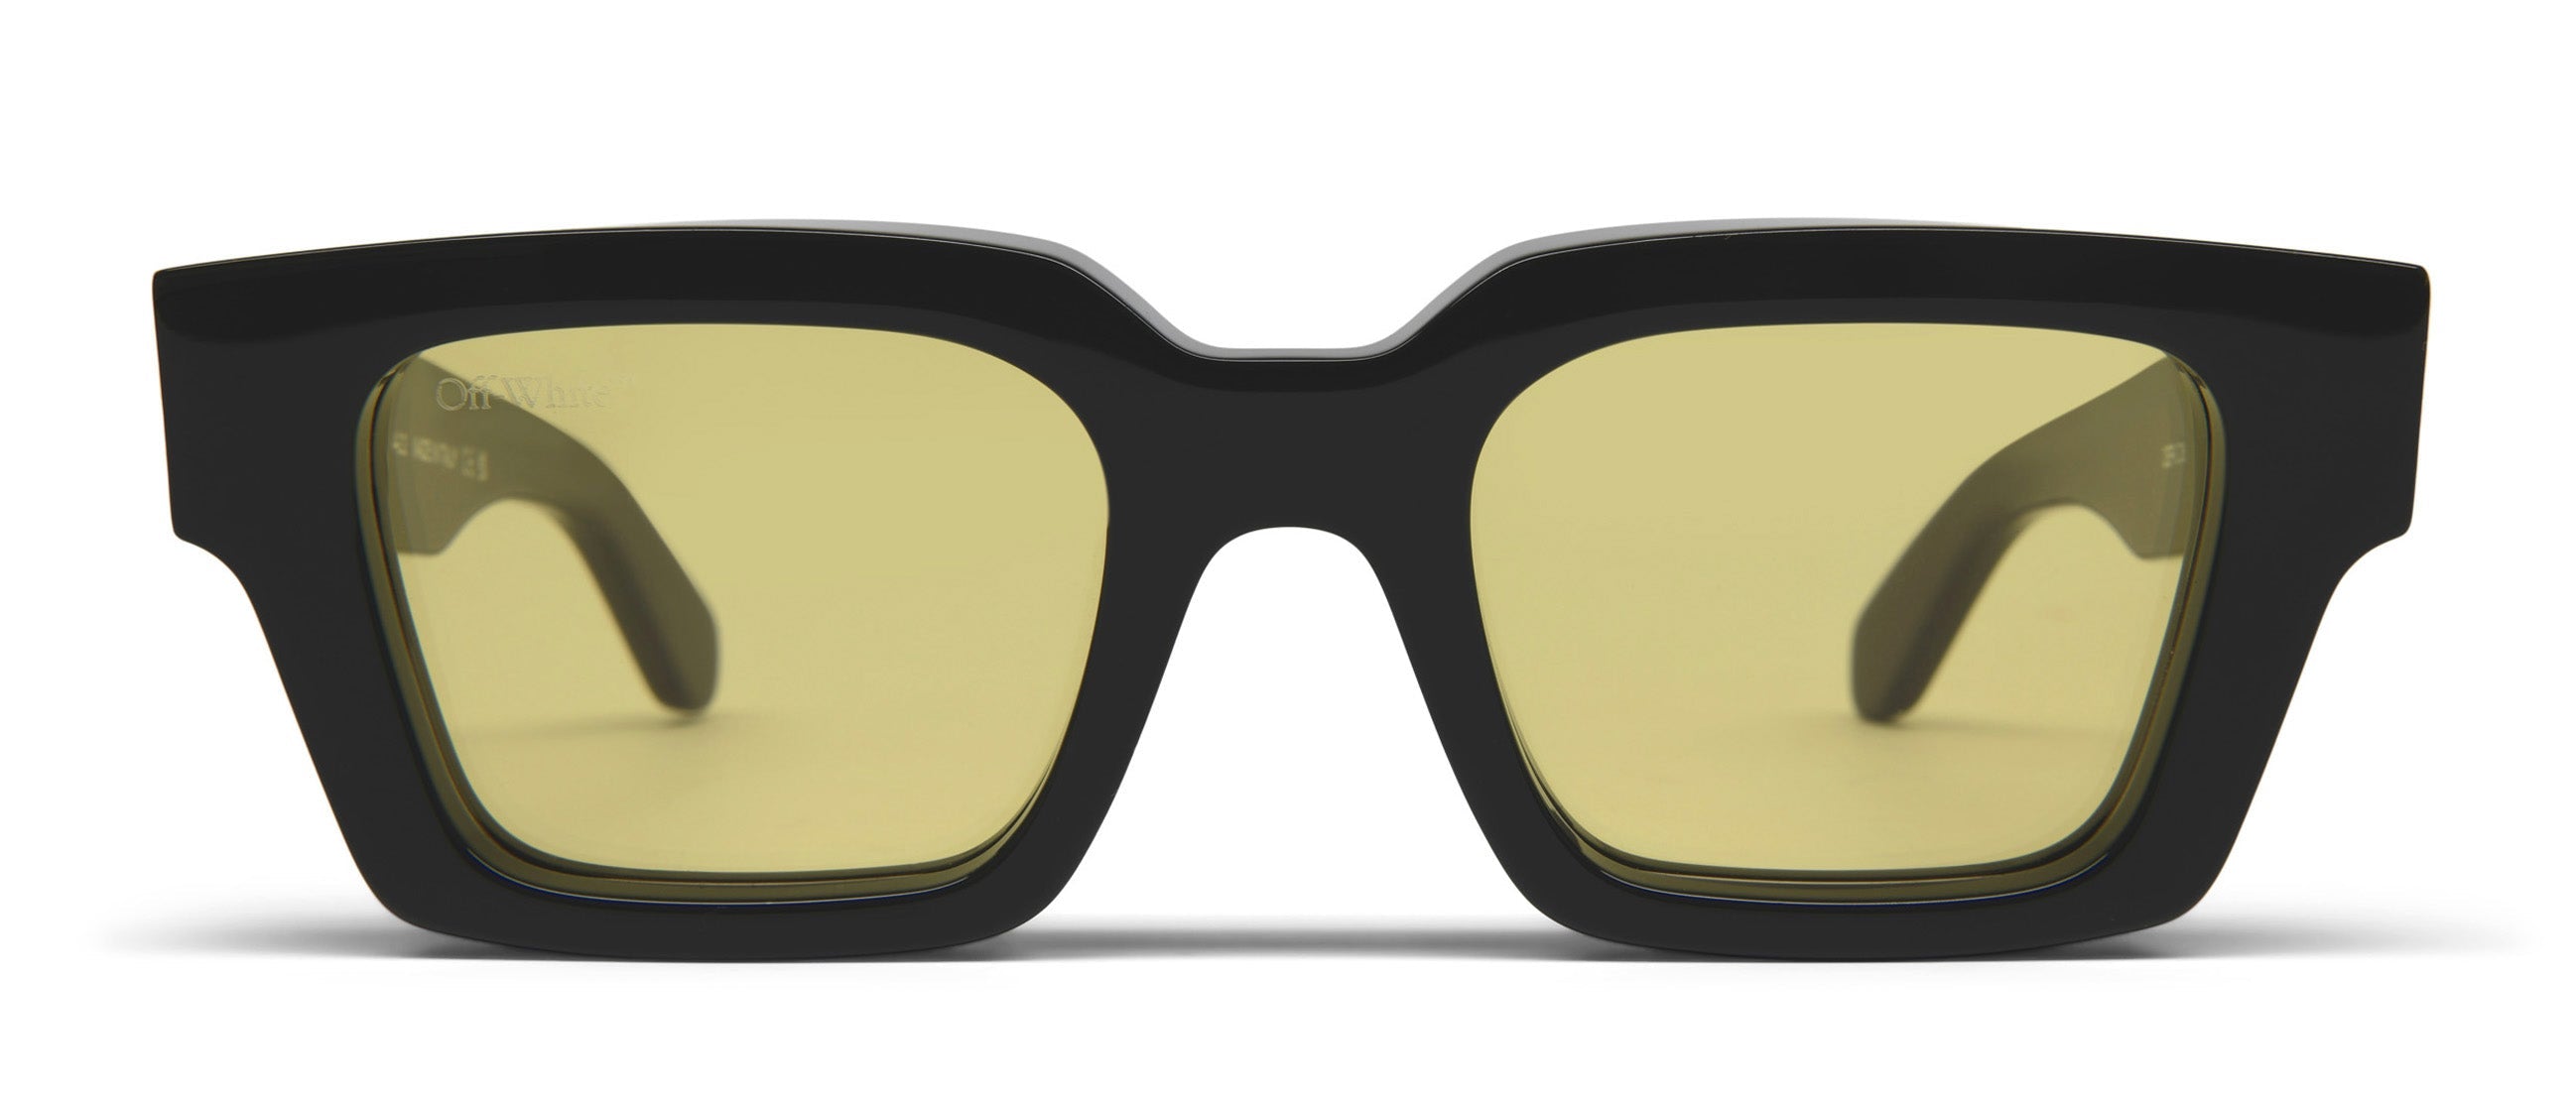 Off-White Seattle Sun Rectangle Sunglasses in Multicolor - Green, Custom Lenses | Visionist